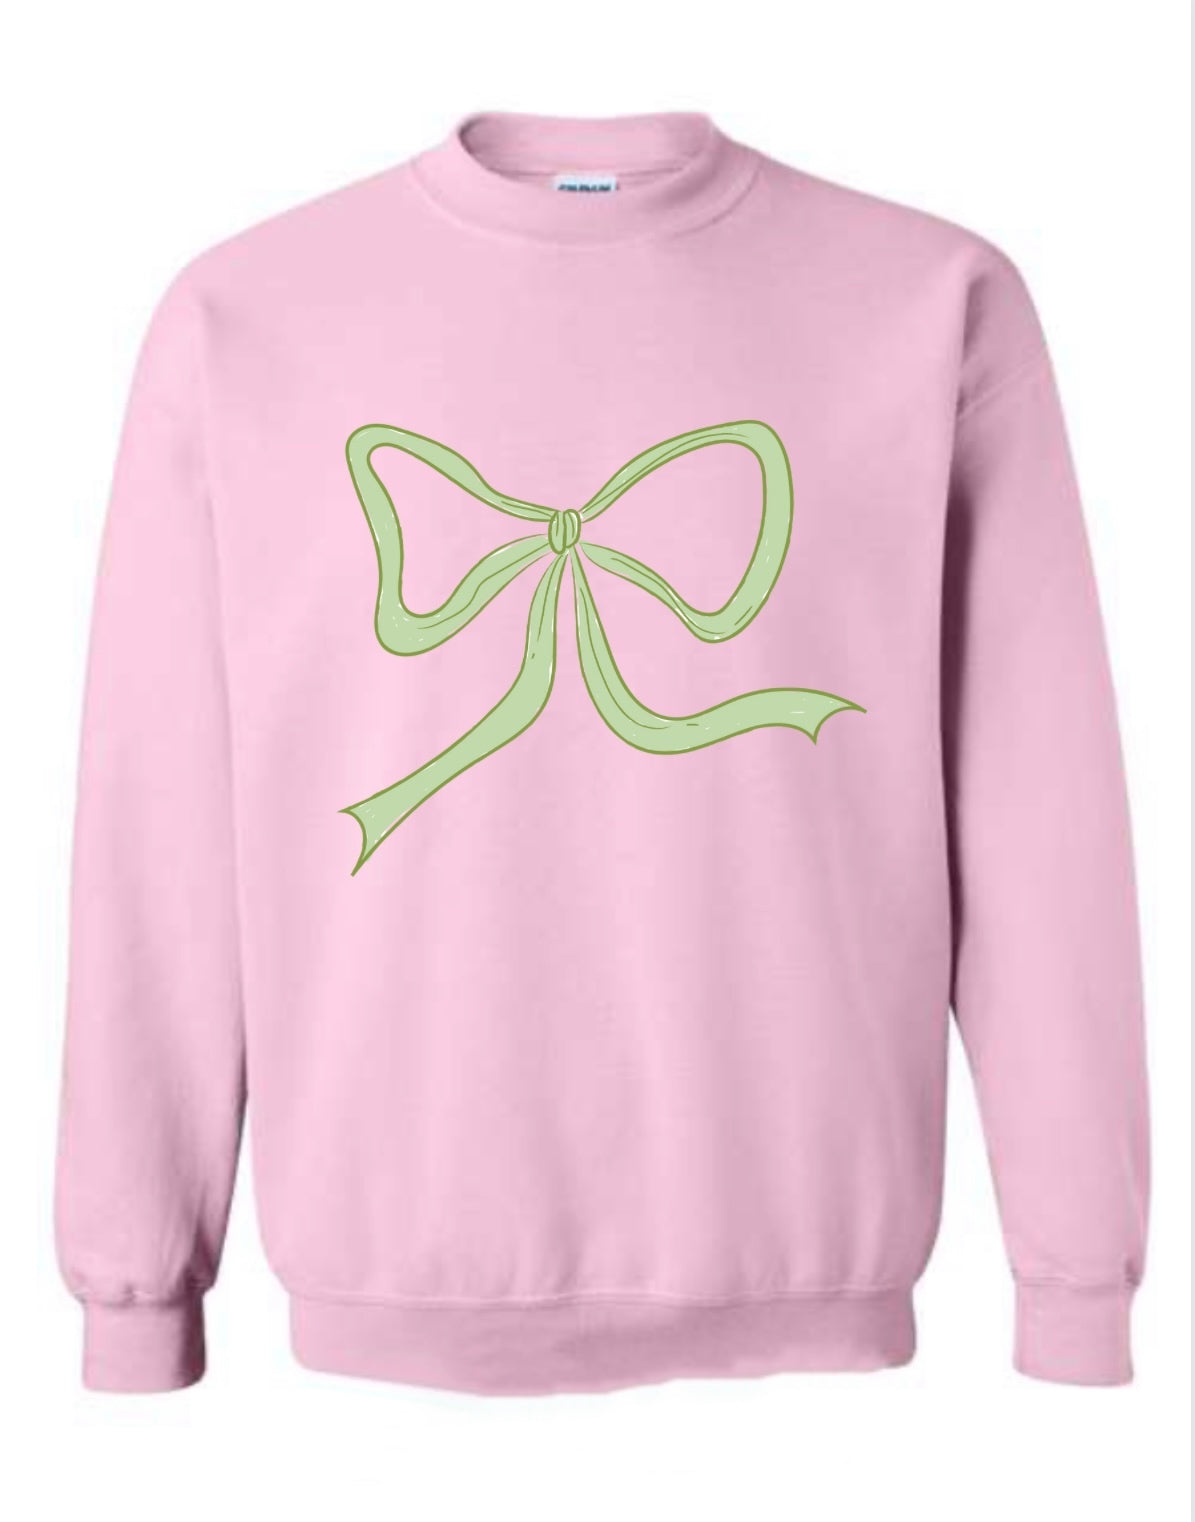 Bow Sweatshirt - Pink